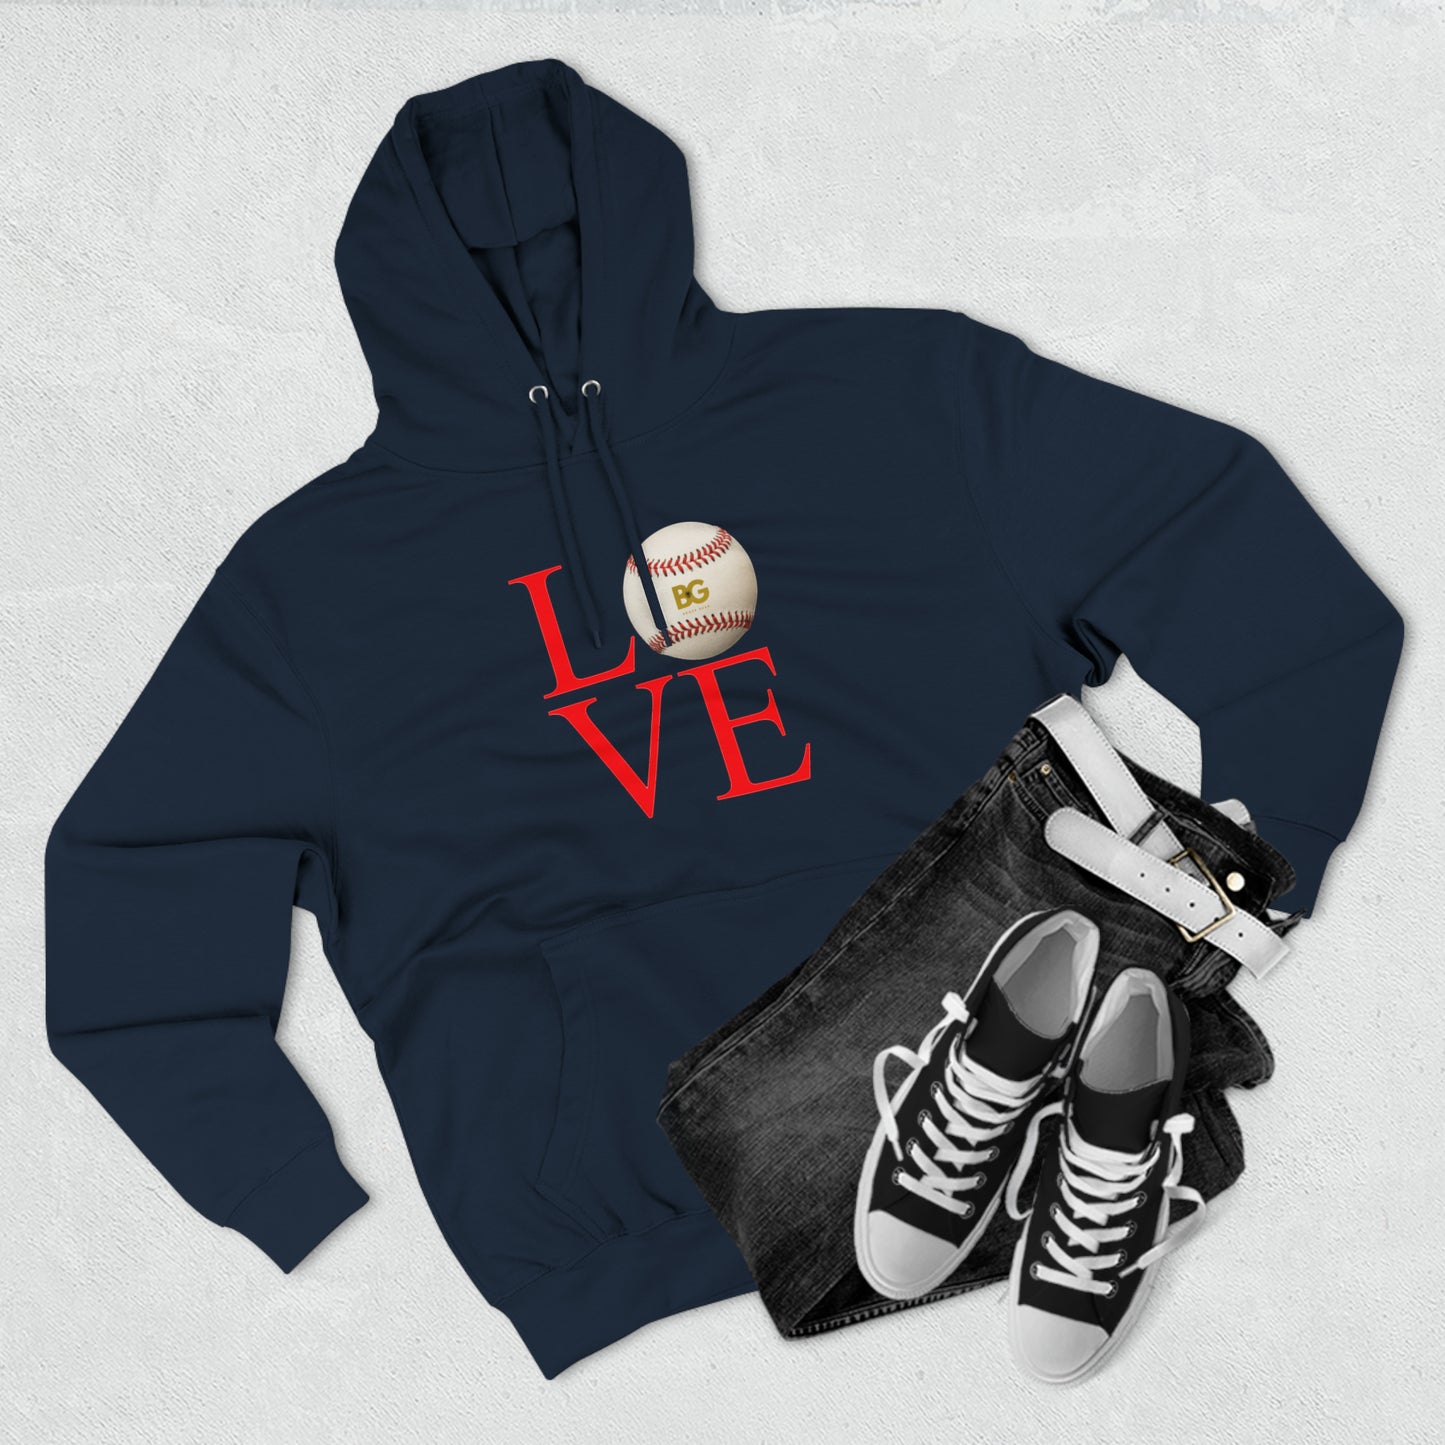 BG "LOVE baseball" Premium Pullover Hoodie